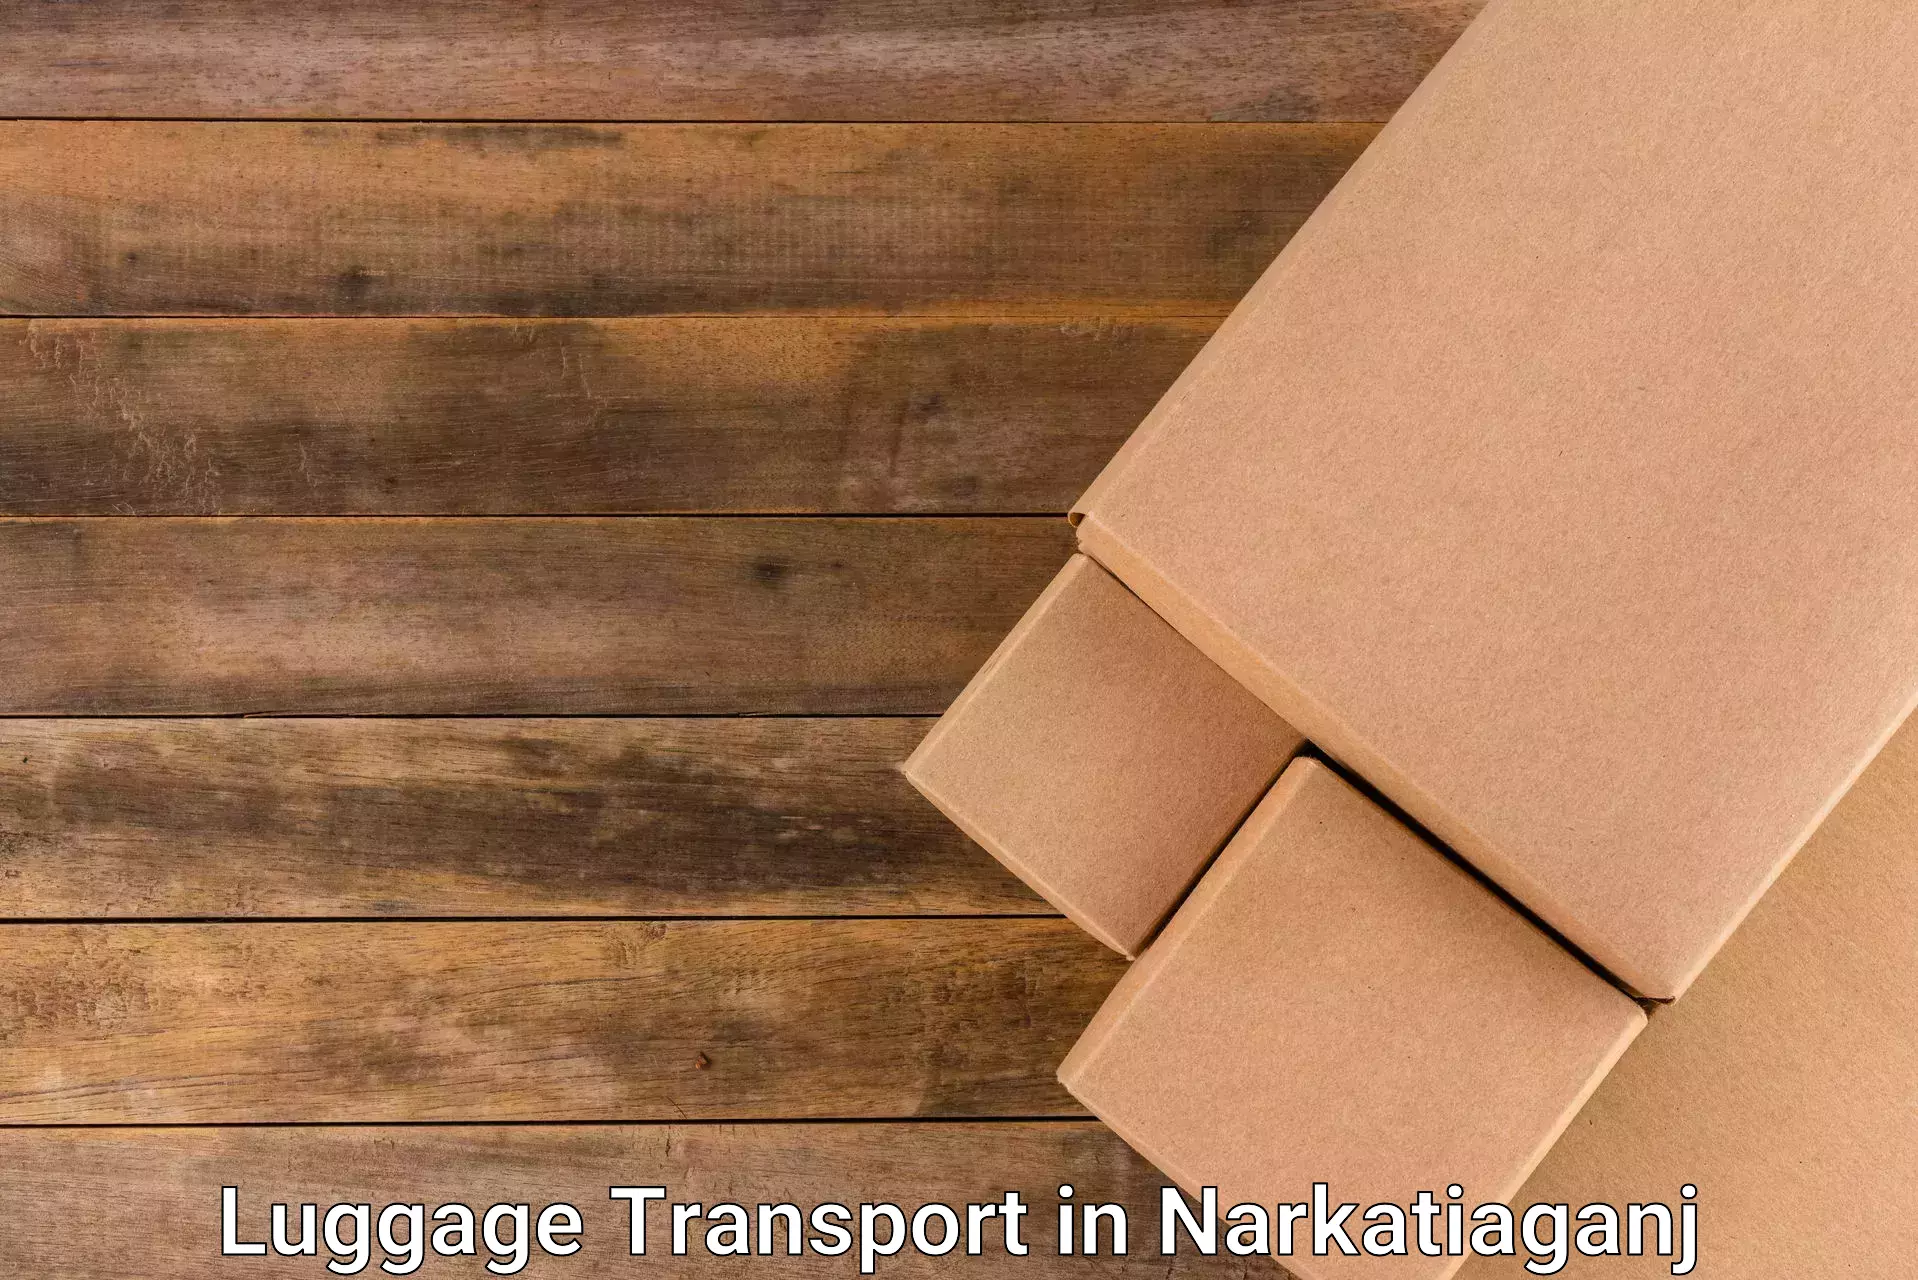 Business luggage transport in Narkatiaganj